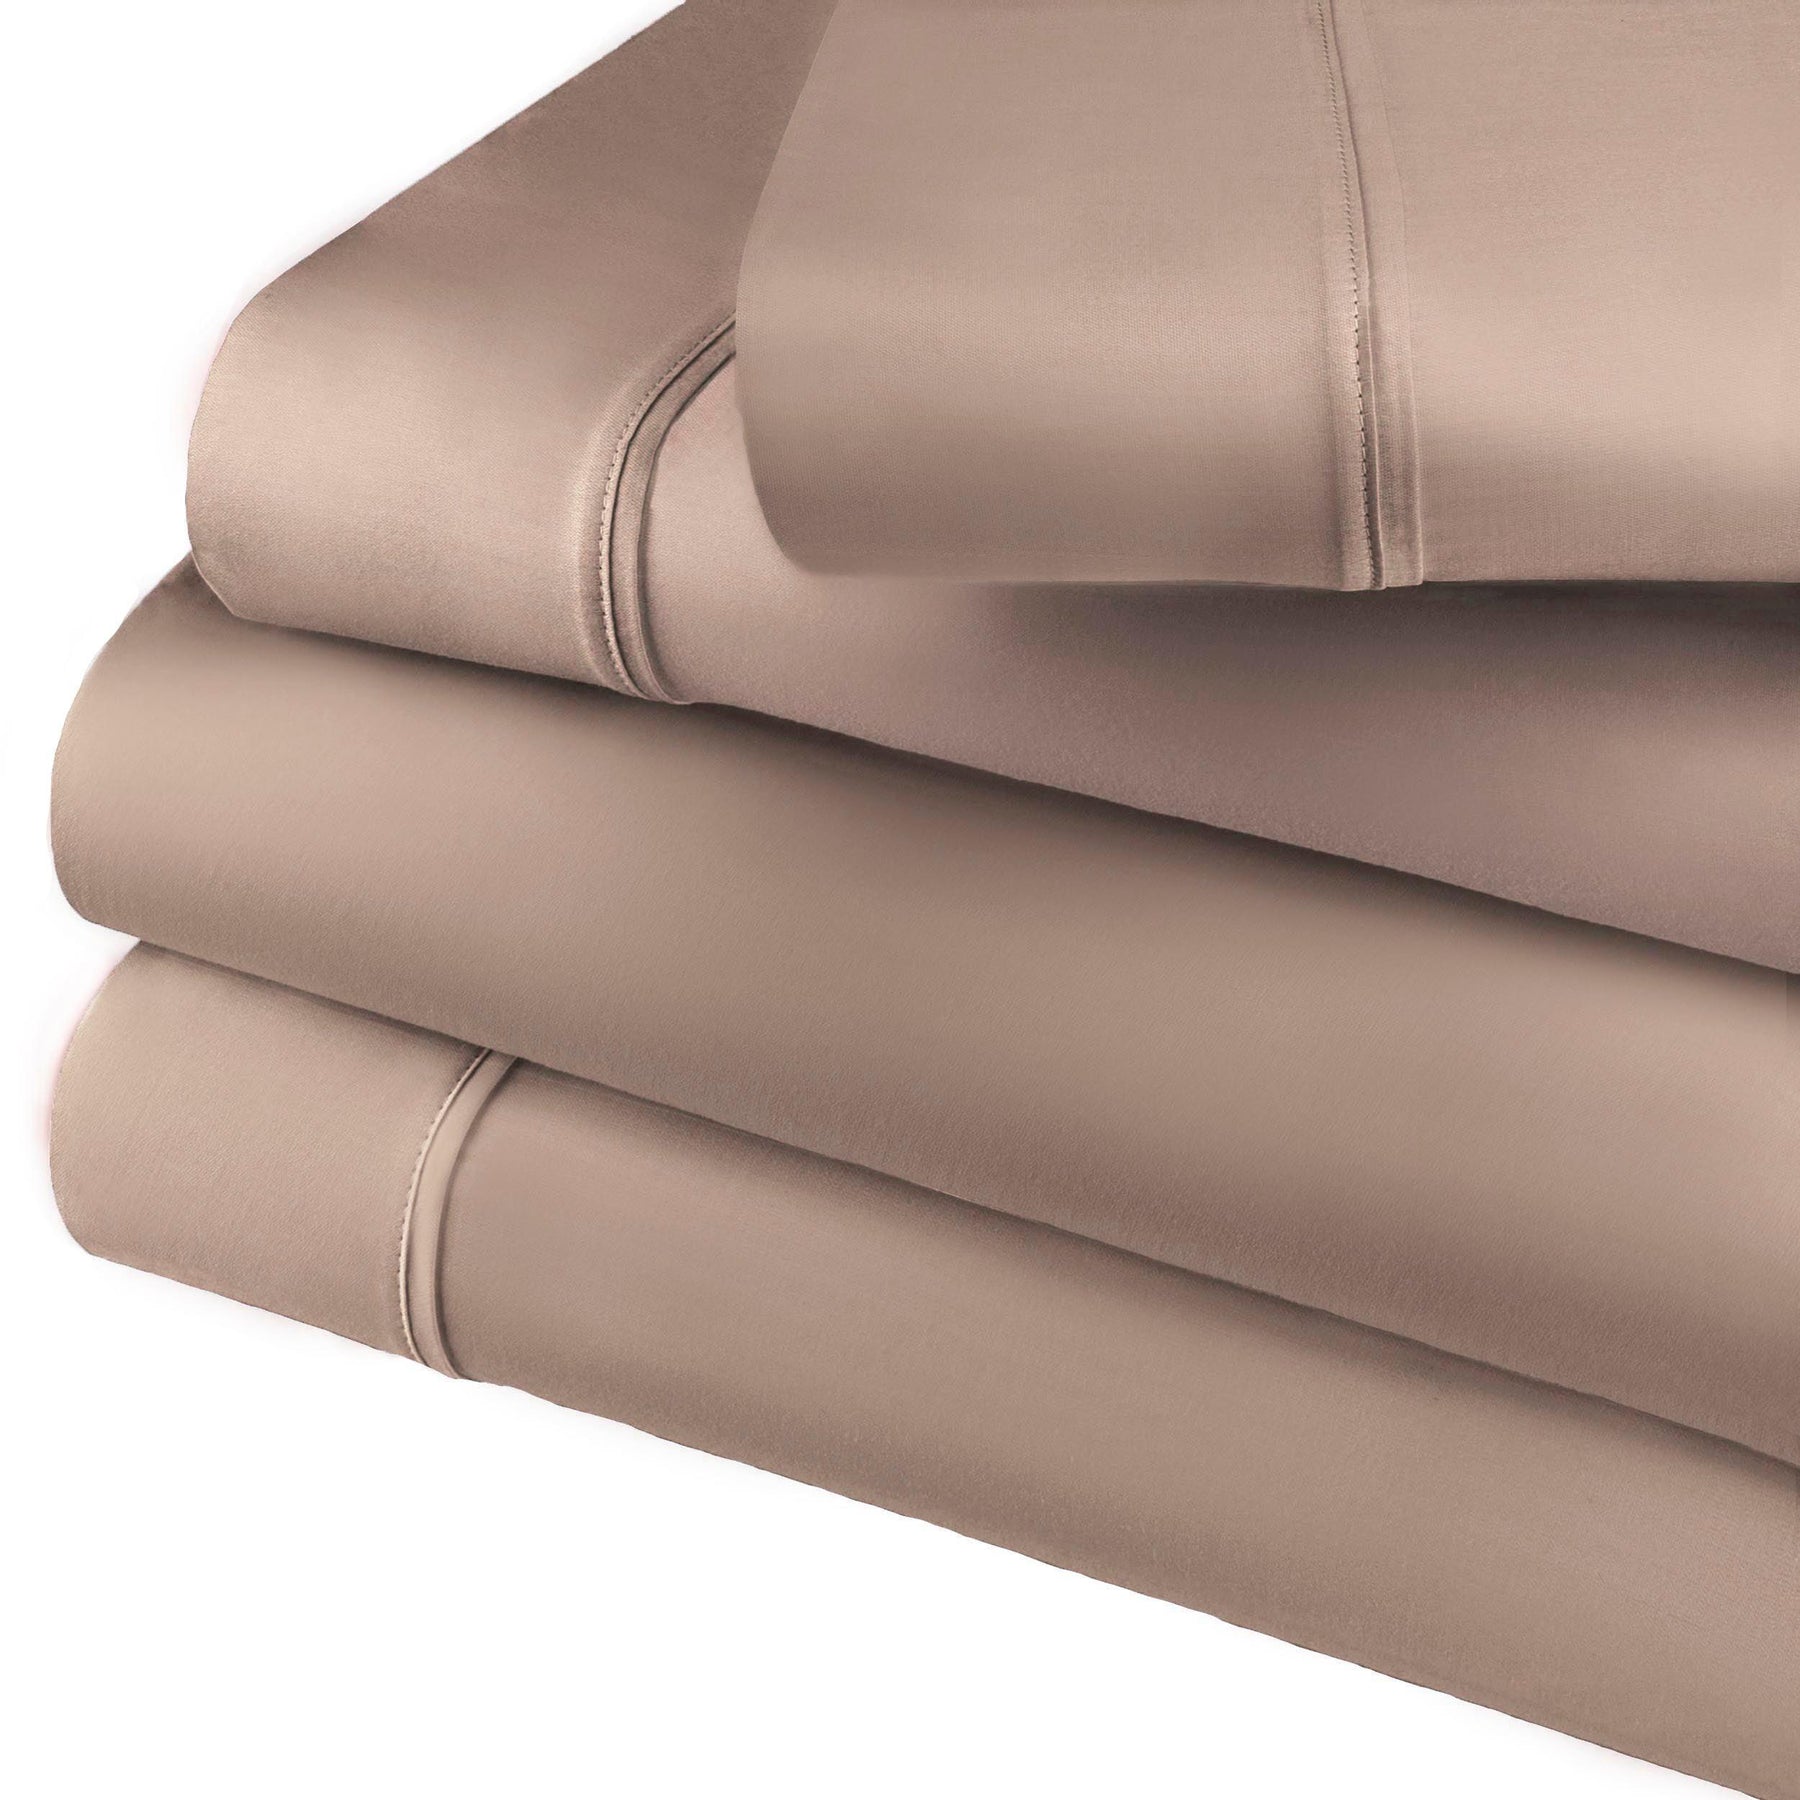  Superior Premium Plush Solid Deep Pocket Cotton Blend Bed Sheet Set -  Taupe